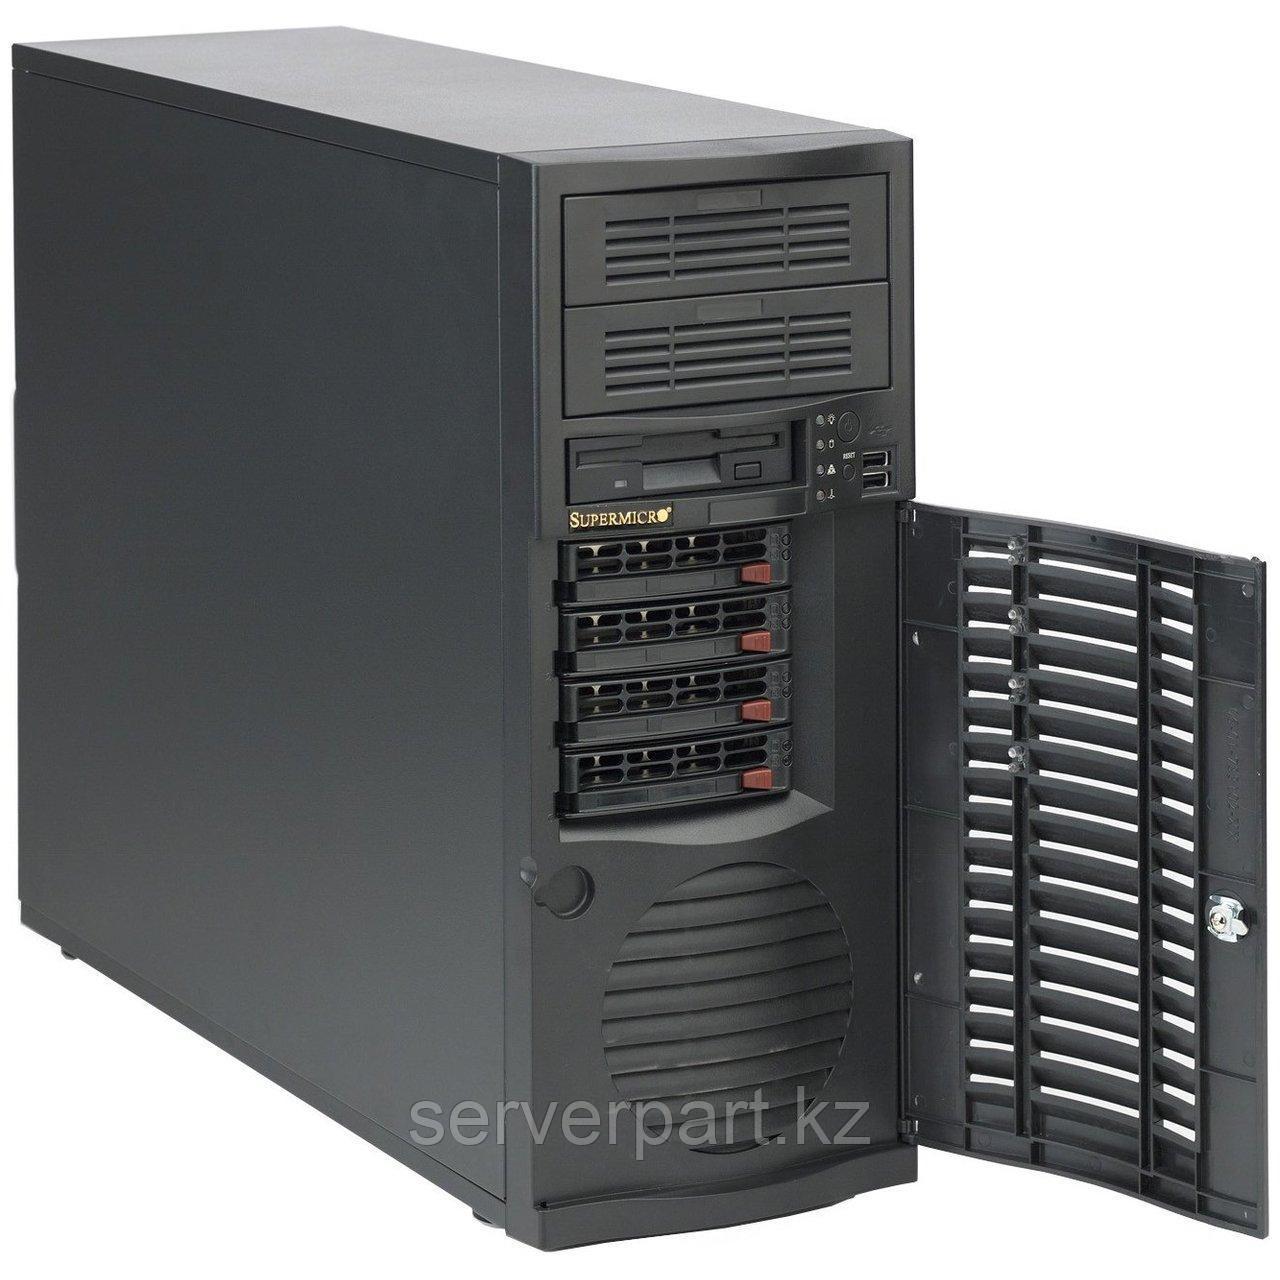 Сервер Supermicro 733T-500B\X11SSL Tower 4LFF/4-core intel xeon E3-1230v6 3.5GHz/no RAM/no HDD hp/RAID